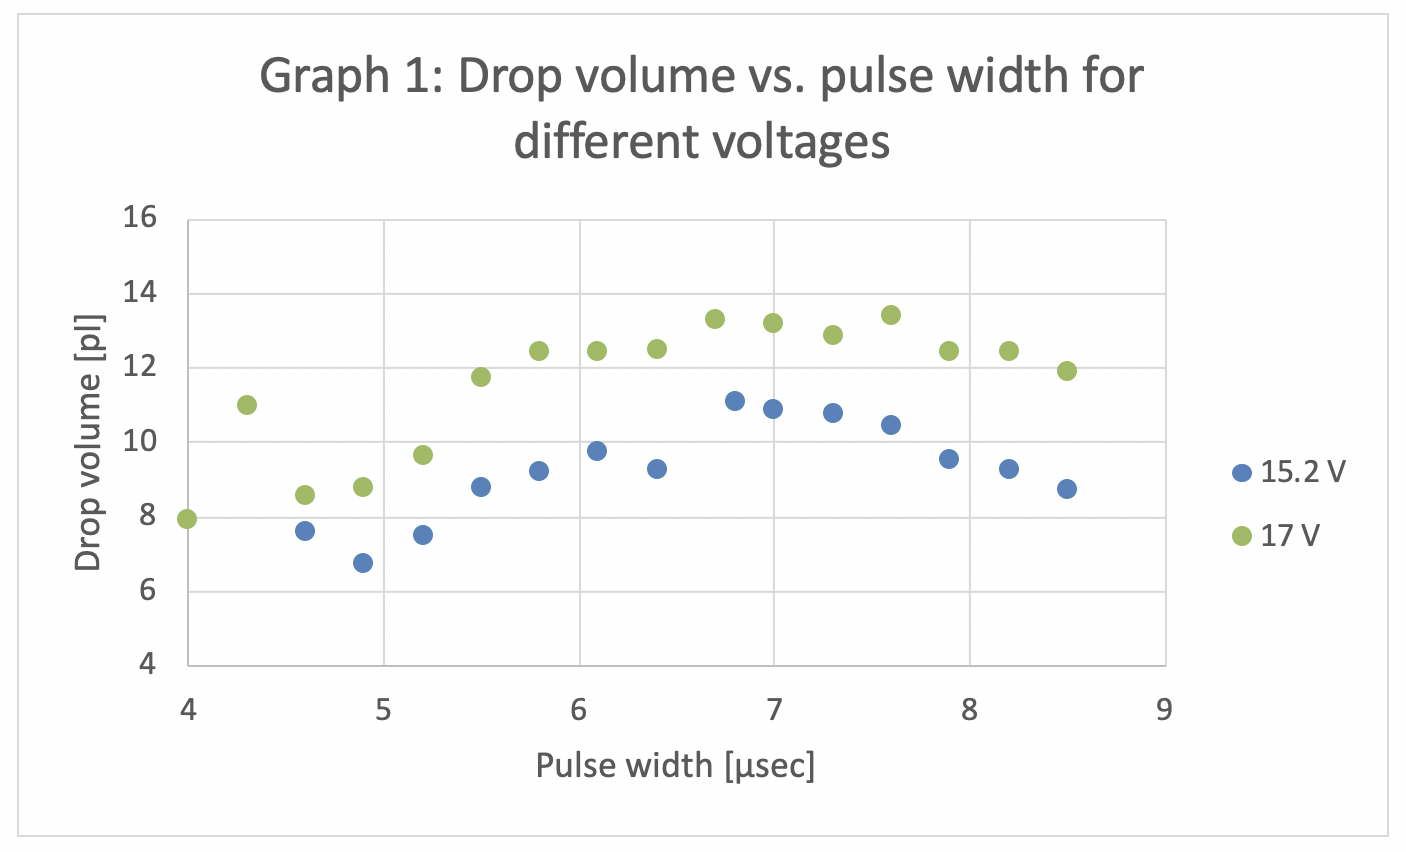 Drop volume verses pulse width